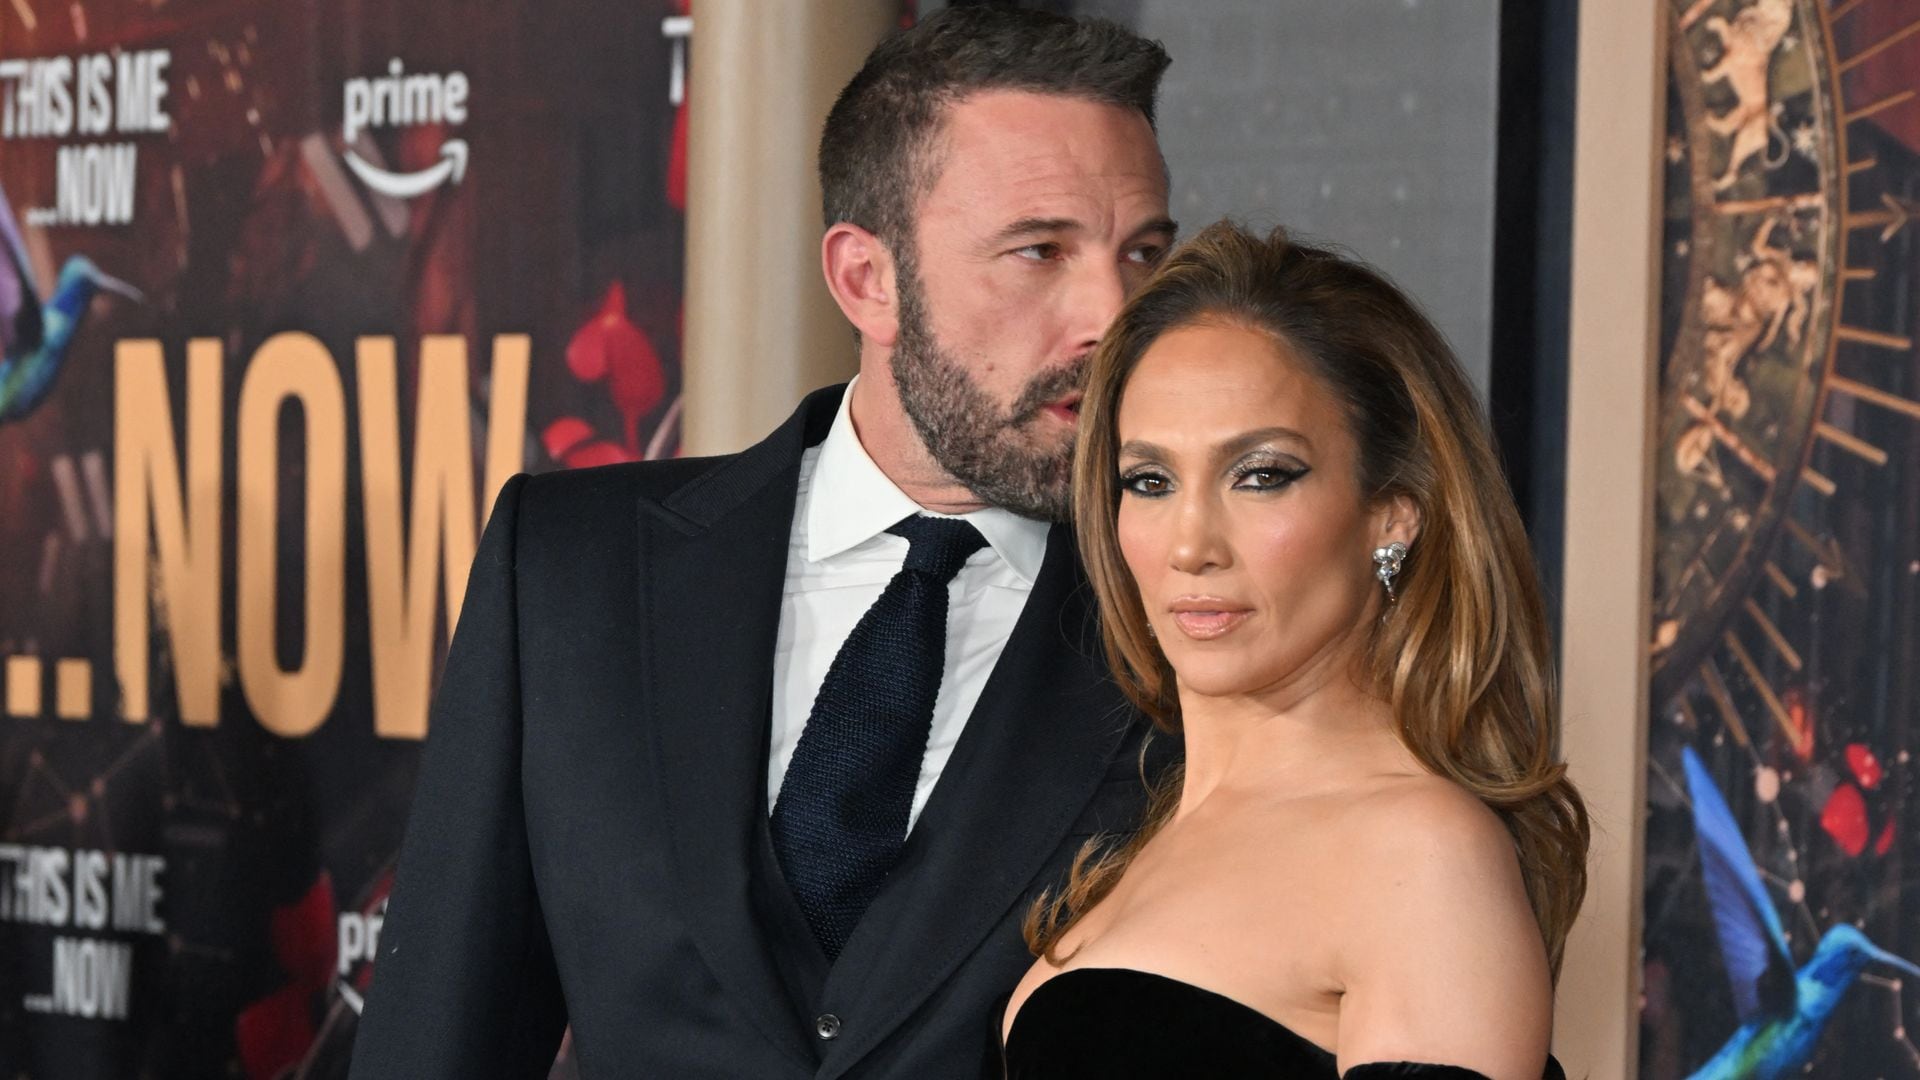 Jennifer Lopez and Ben Affleck's relationship update amid divorce rumors: 'Nothing can break her spirit'